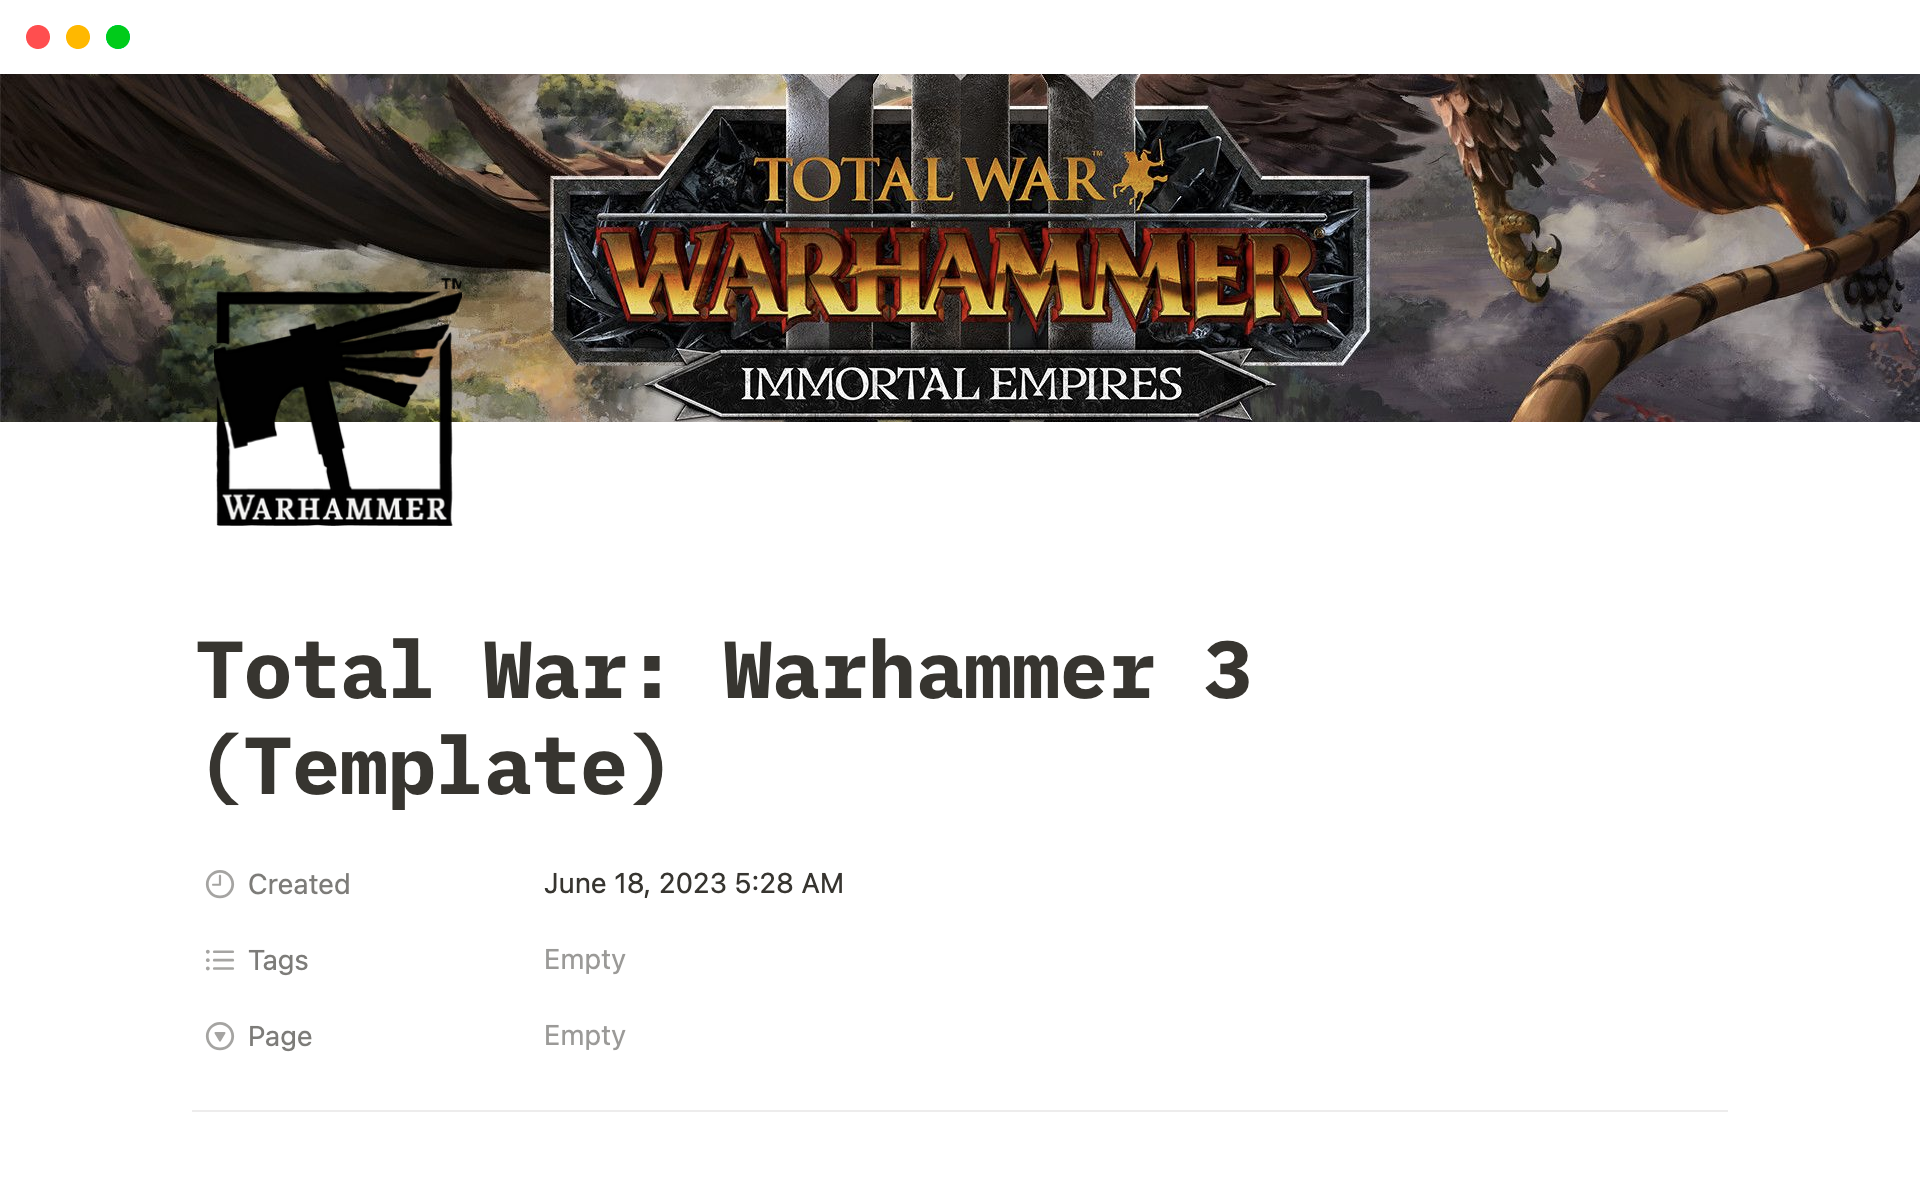 Warhammer 3 Total War Faction Tracker님의 템플릿 미리보기